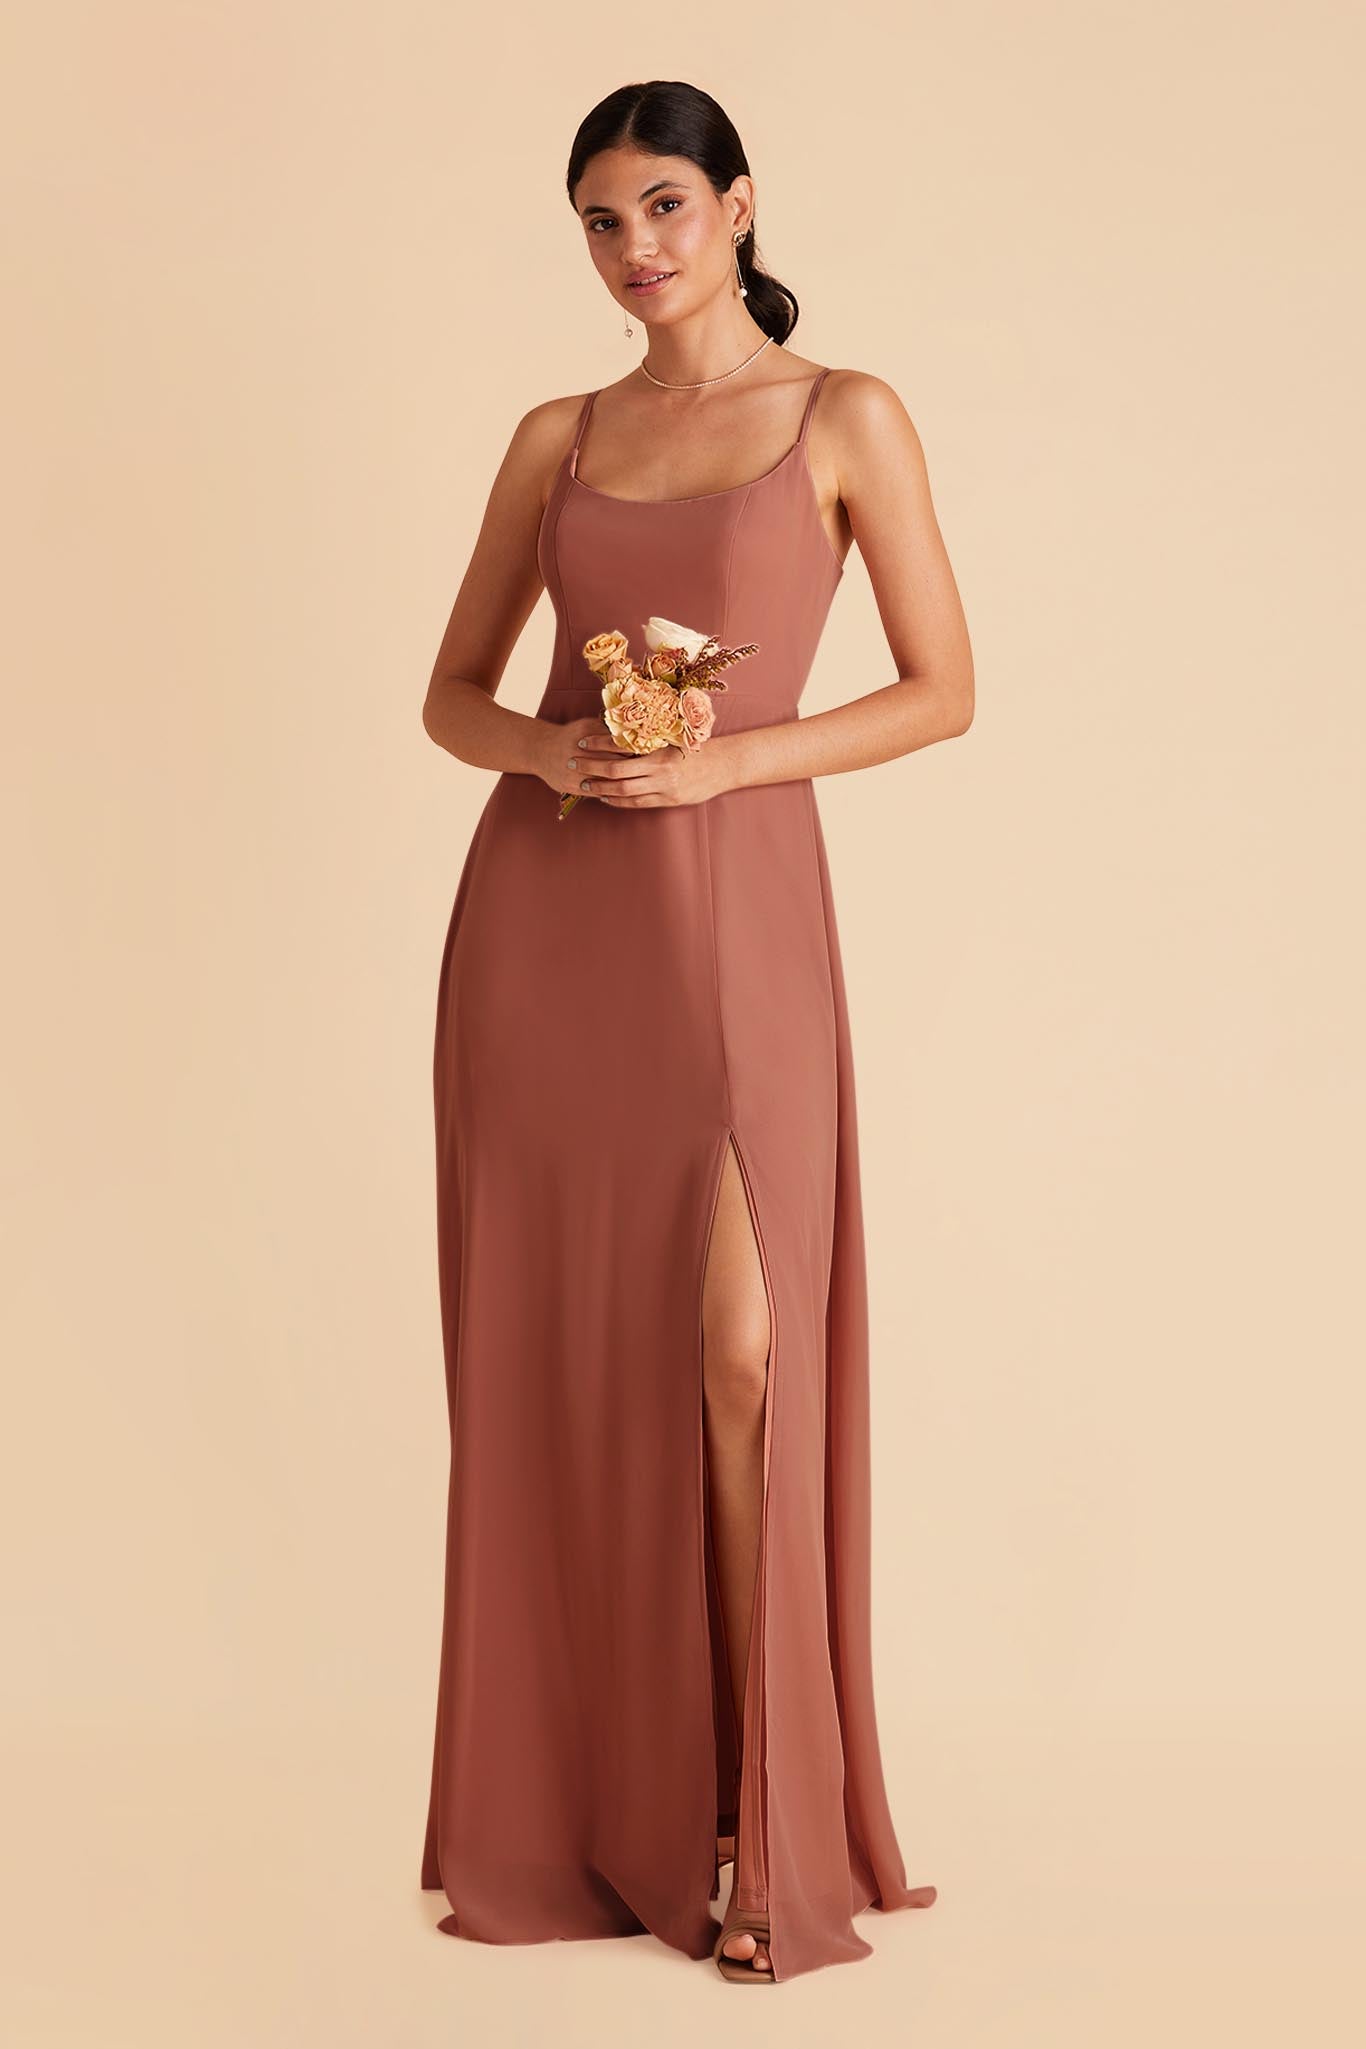 Desert Rose Amy Chiffon Dress by Birdy Grey